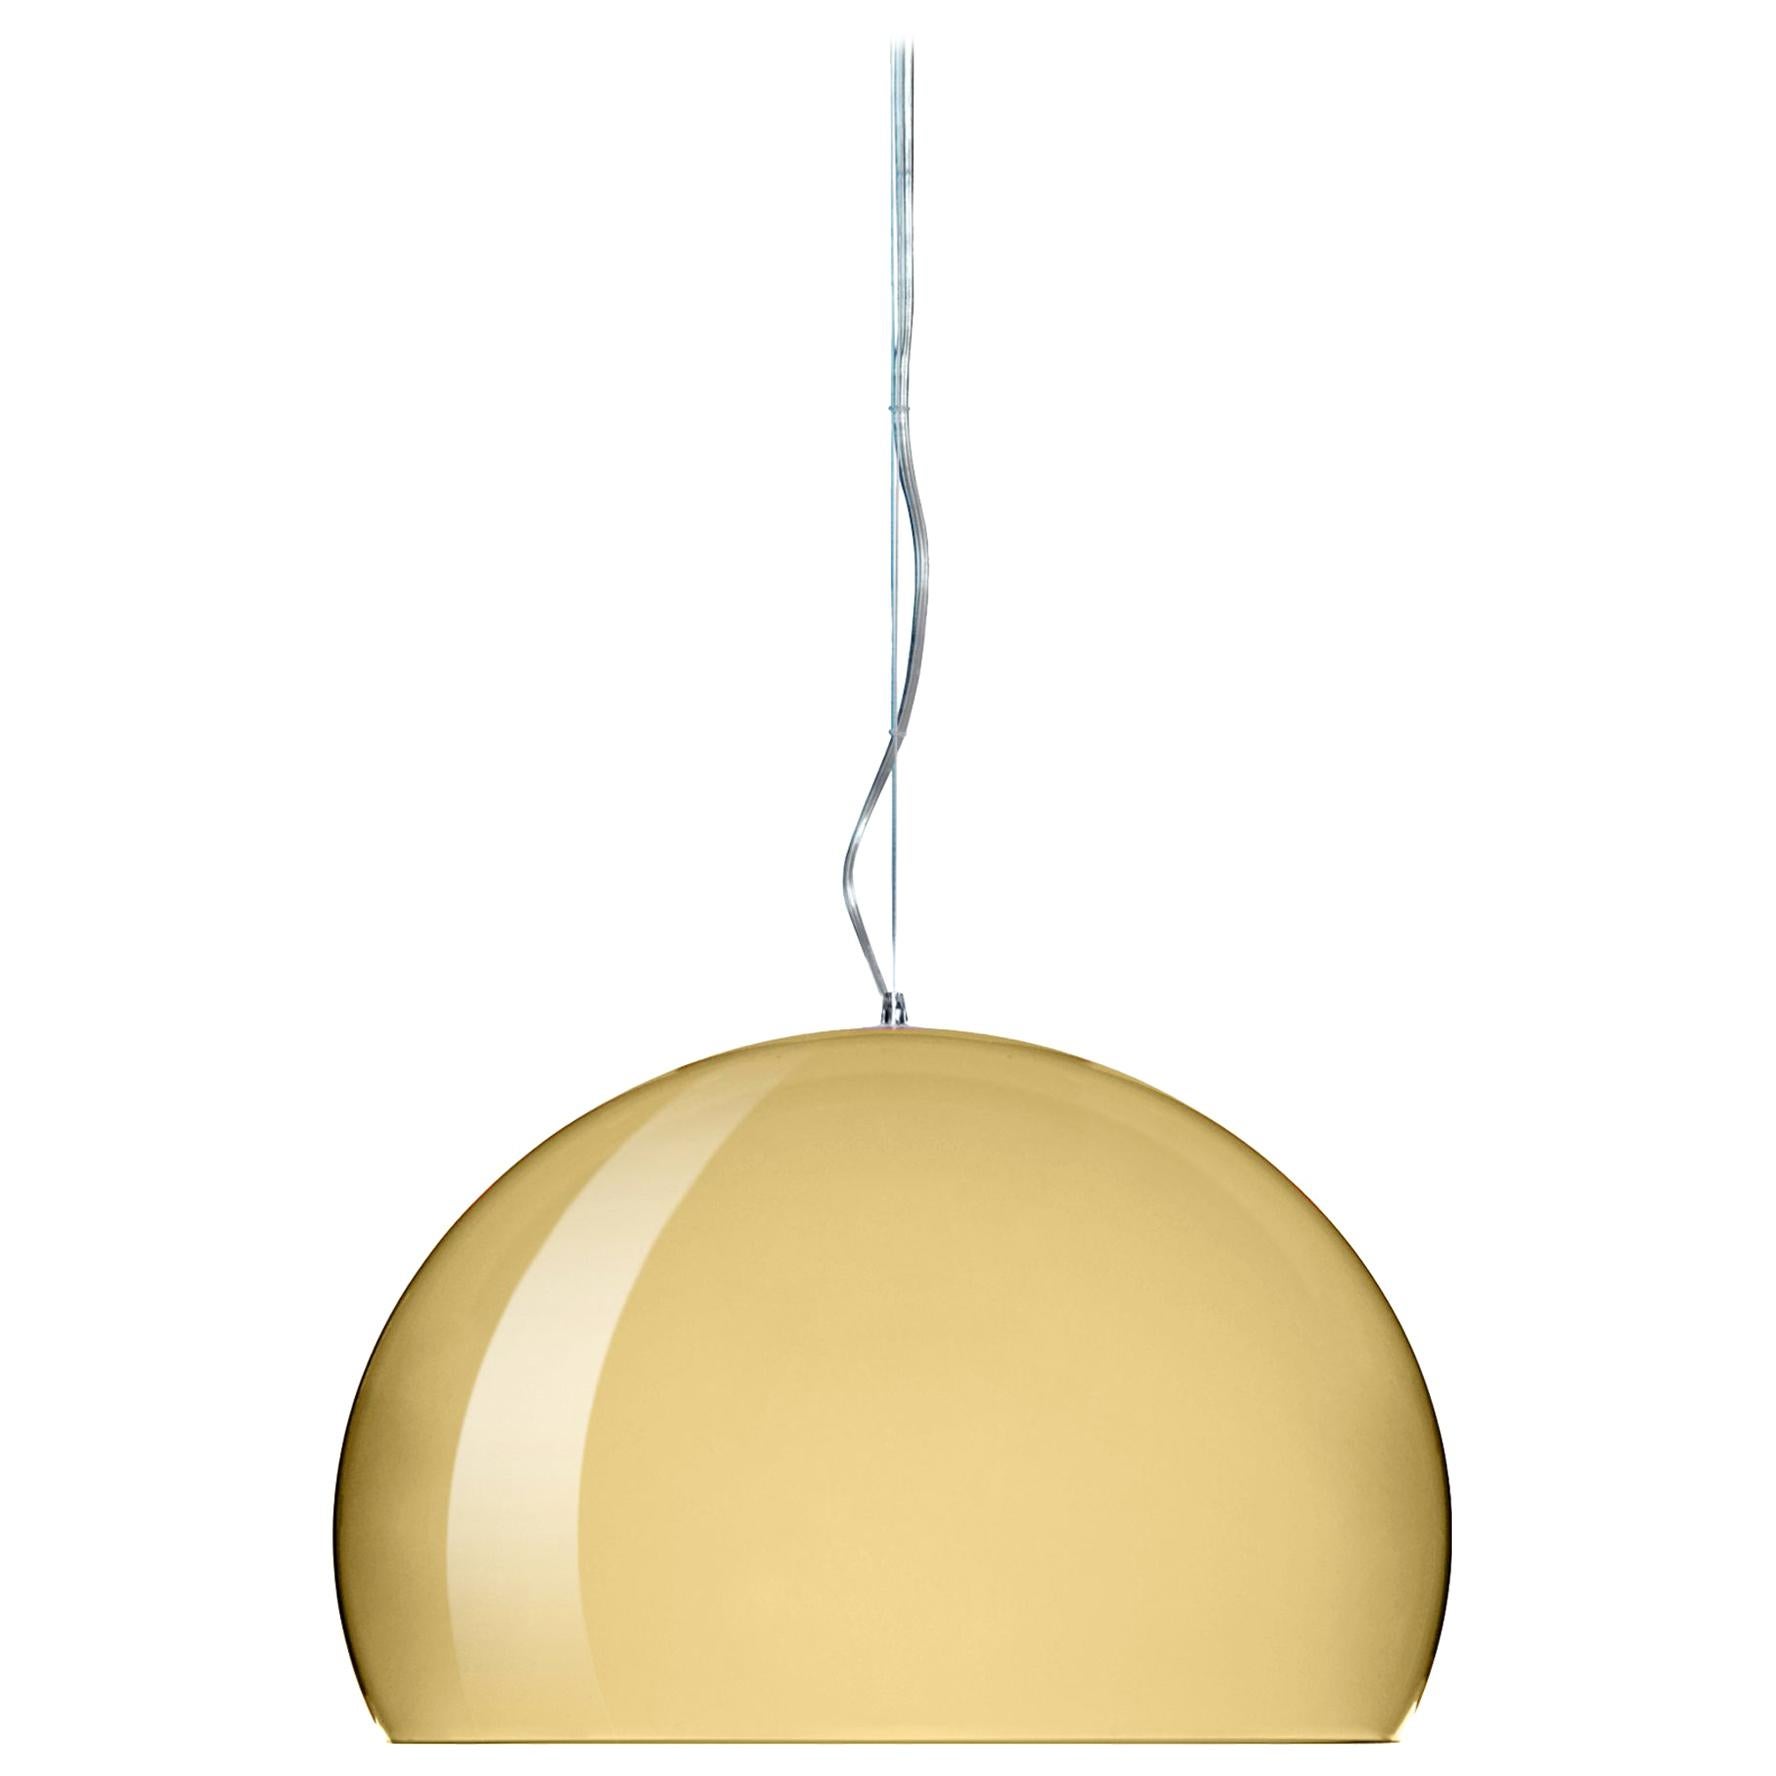 Lampe à suspension Kartell FL/Y en or, taille moyenne, par Ferruccio Laviani